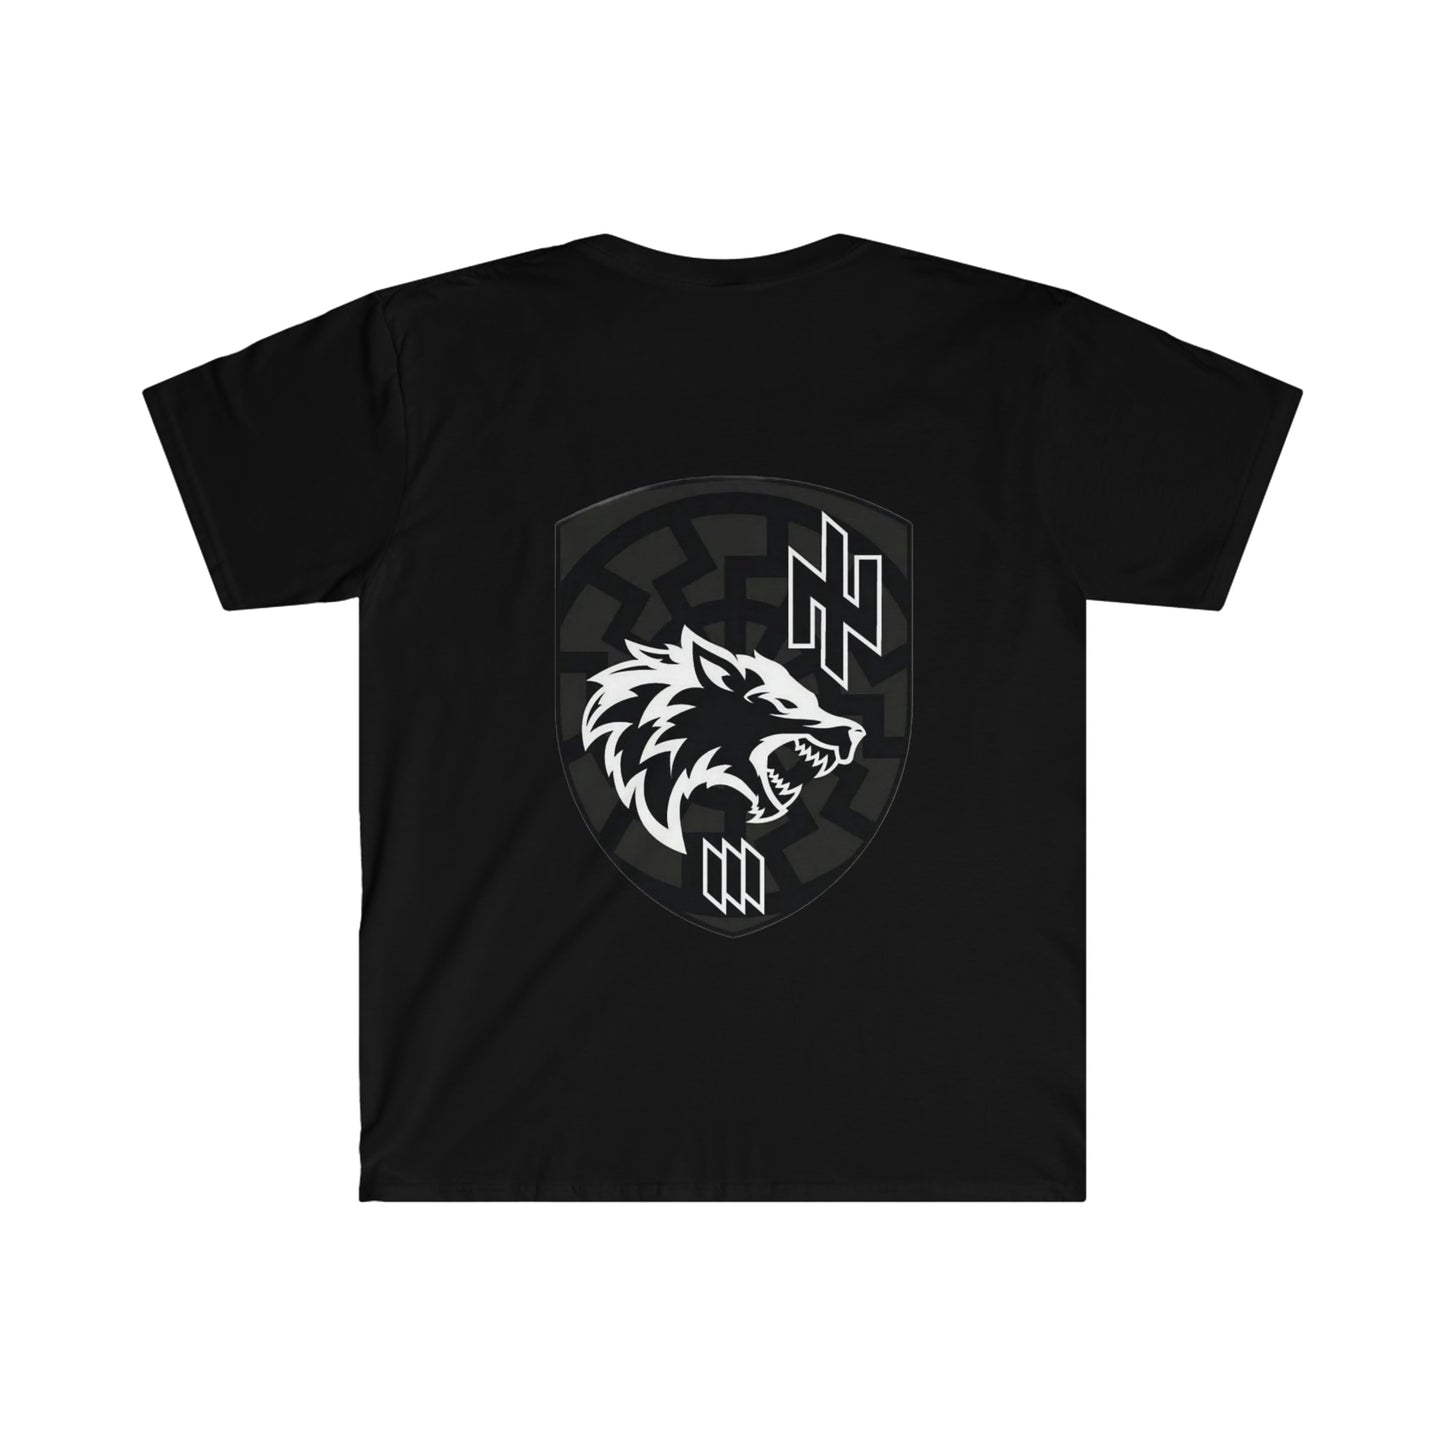 3rd Separate Assault Brigade Wolf Unisex Softstyle T-Shirt